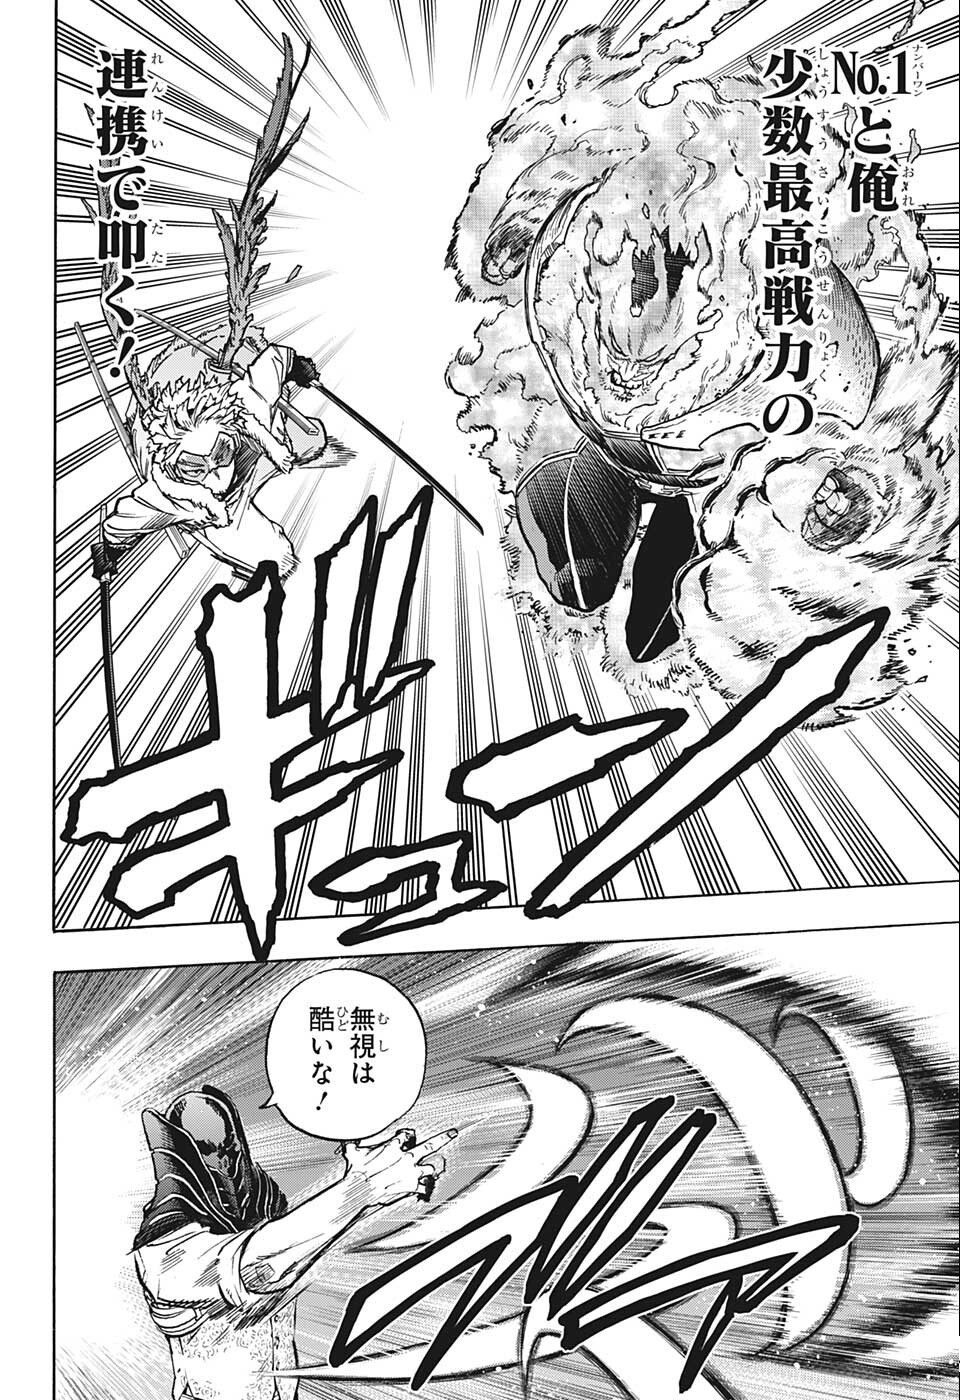 Boku no Hero Academia - Chapter 354 - Page 2